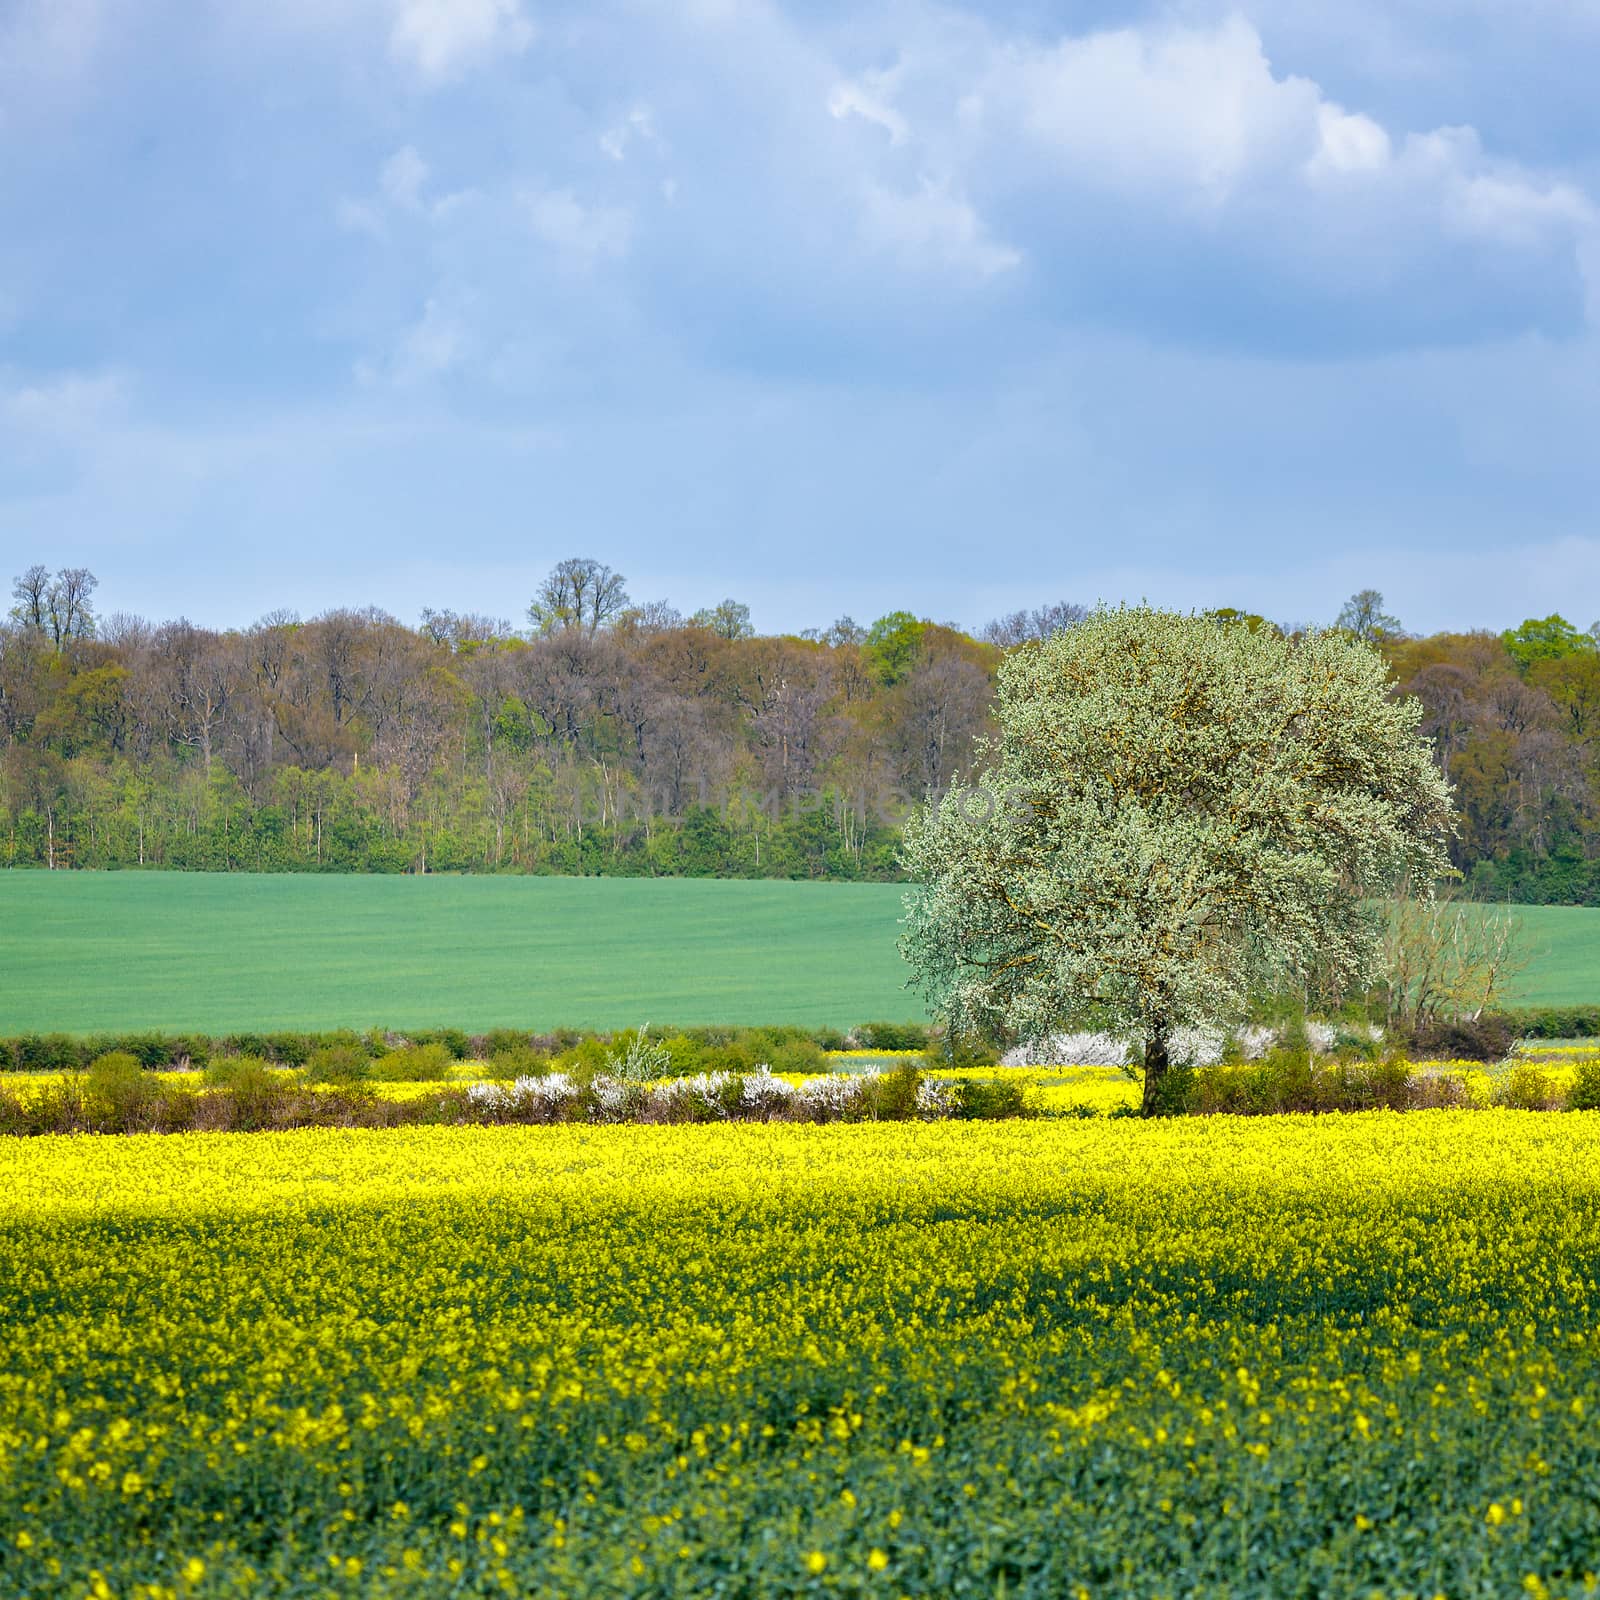 Arable Farmland in Cambridgeshire on a Sunny Spring Day by phil_bird